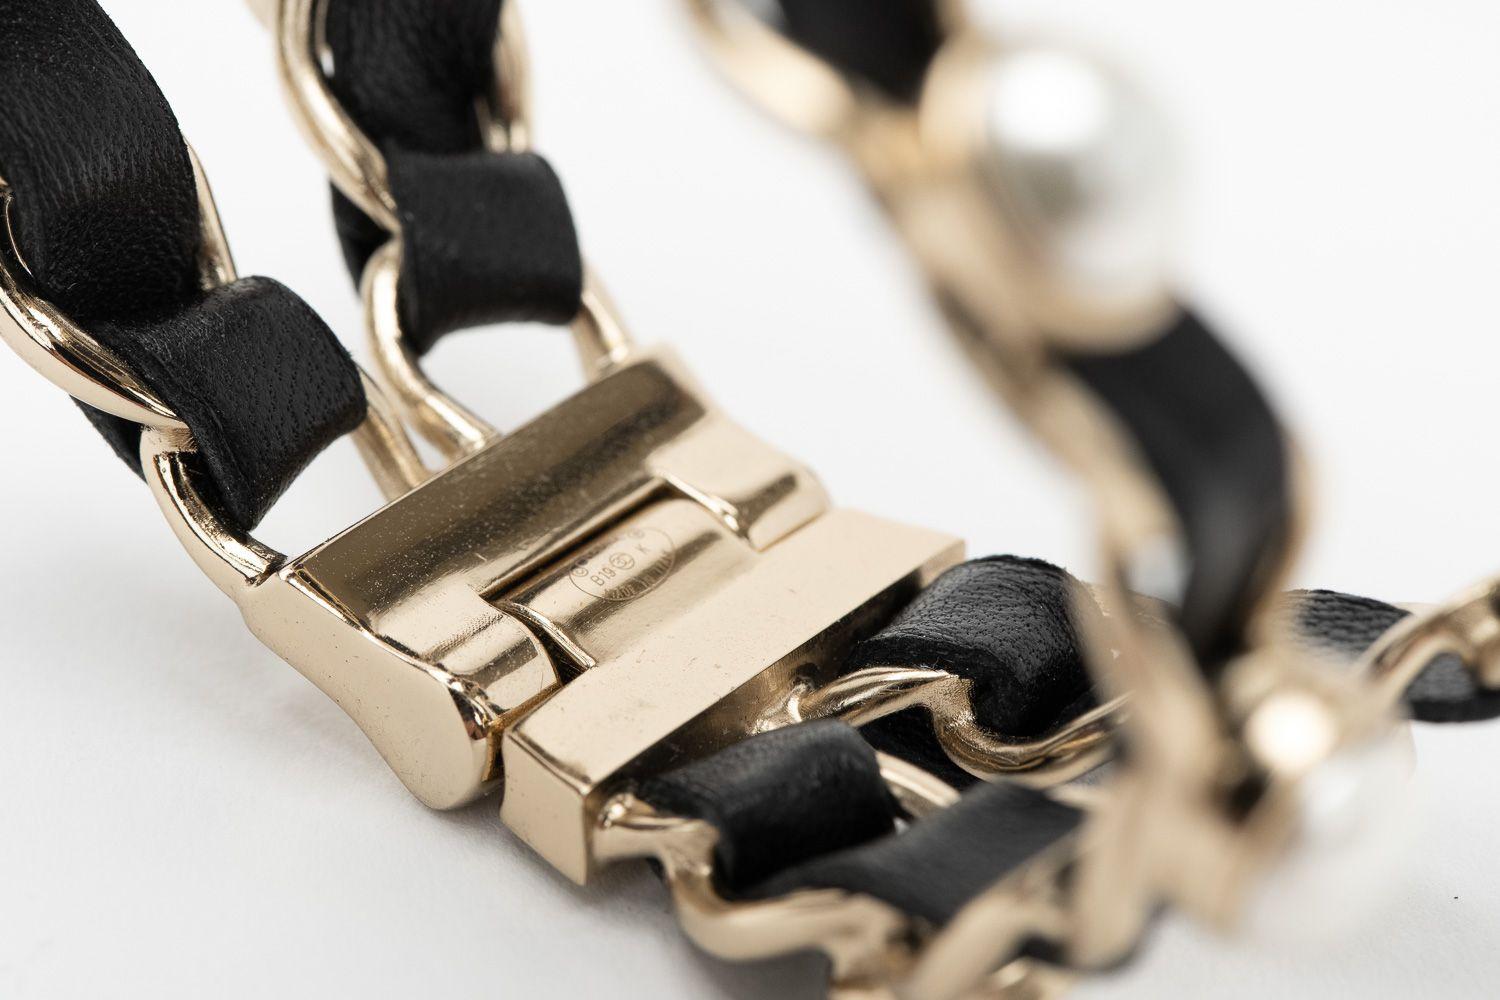 Women's or Men's Chanel Black Lamb/Pearl Clamp Bracelet New  For Sale